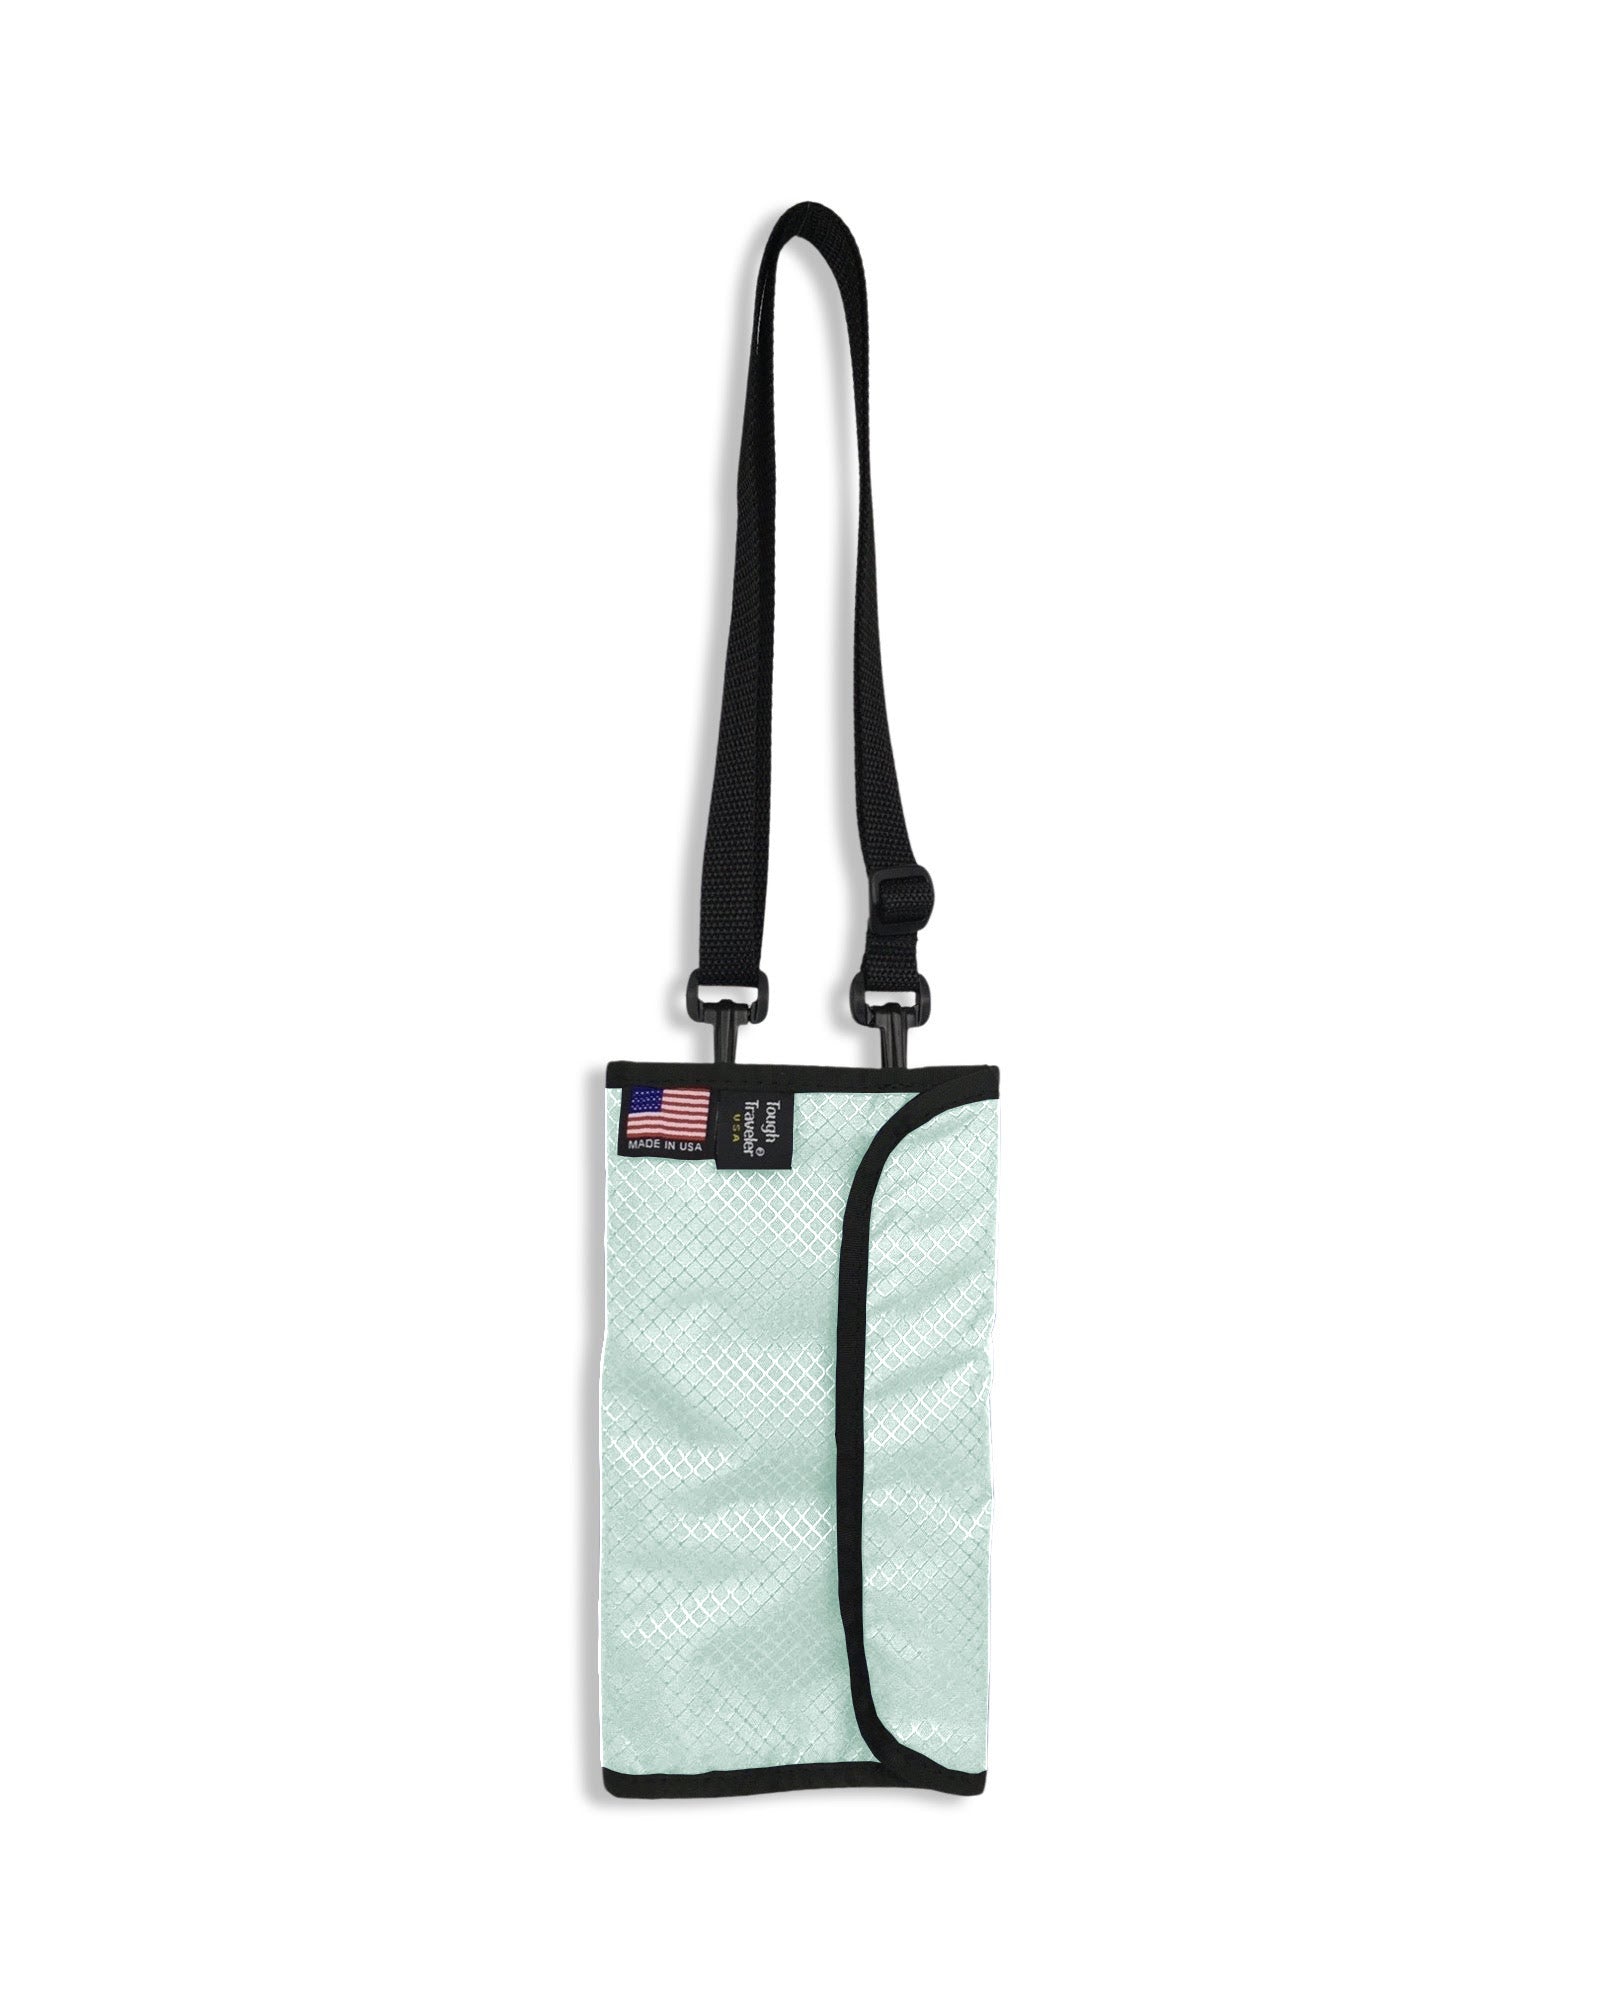 Hand sanitizer holder - Hand sanitizer holders - Briana's Handbags &  Accessories - Fashion Accessories